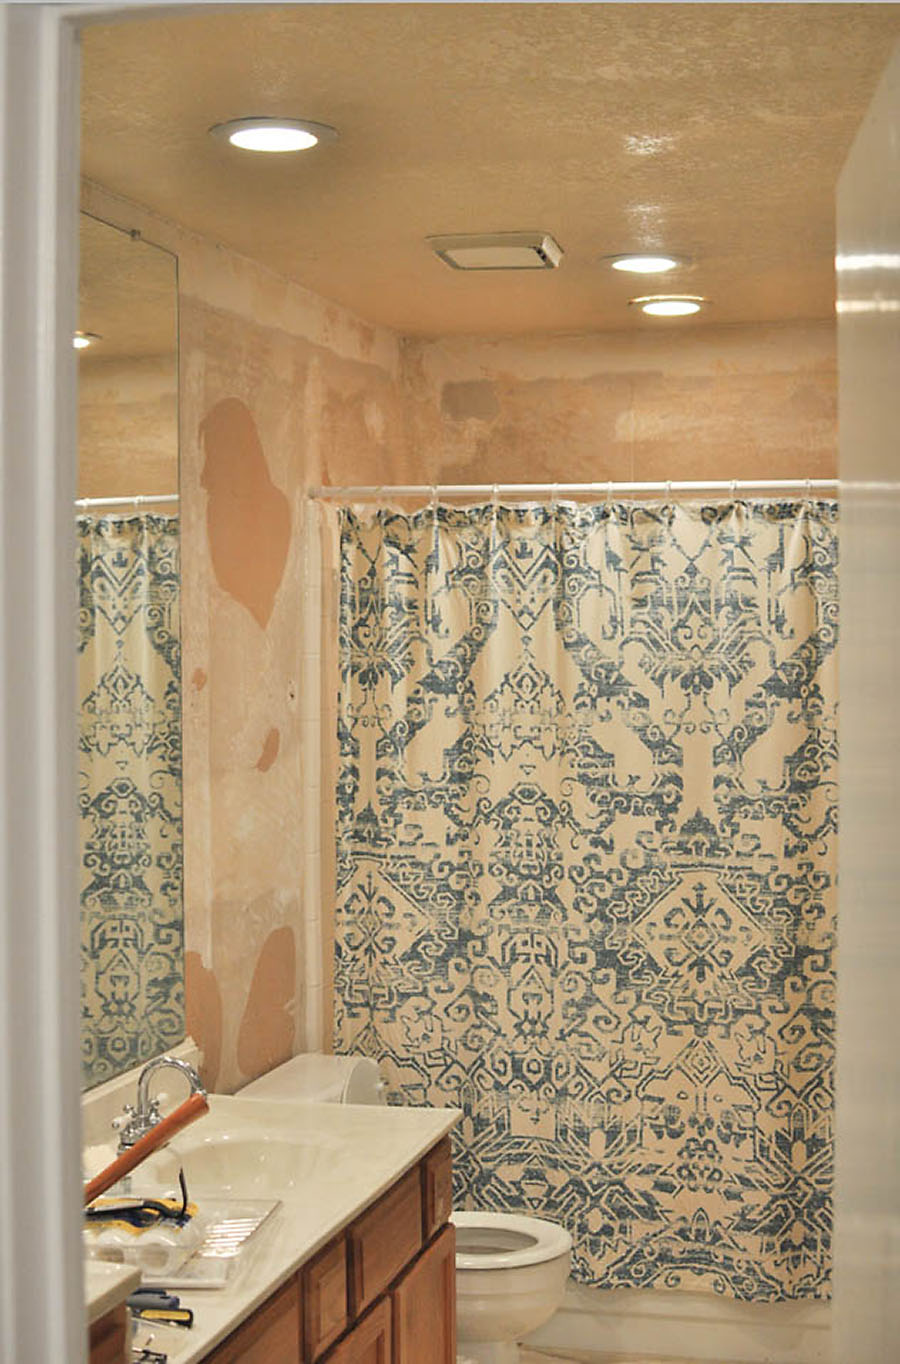 http://ourhandcraftedlife.com/wp-content/uploads/2019/07/Master-Bathroom-Tiled-Walk-In-Shower-Renovation-Before-Our-Handcrafted-Life-1.jpg